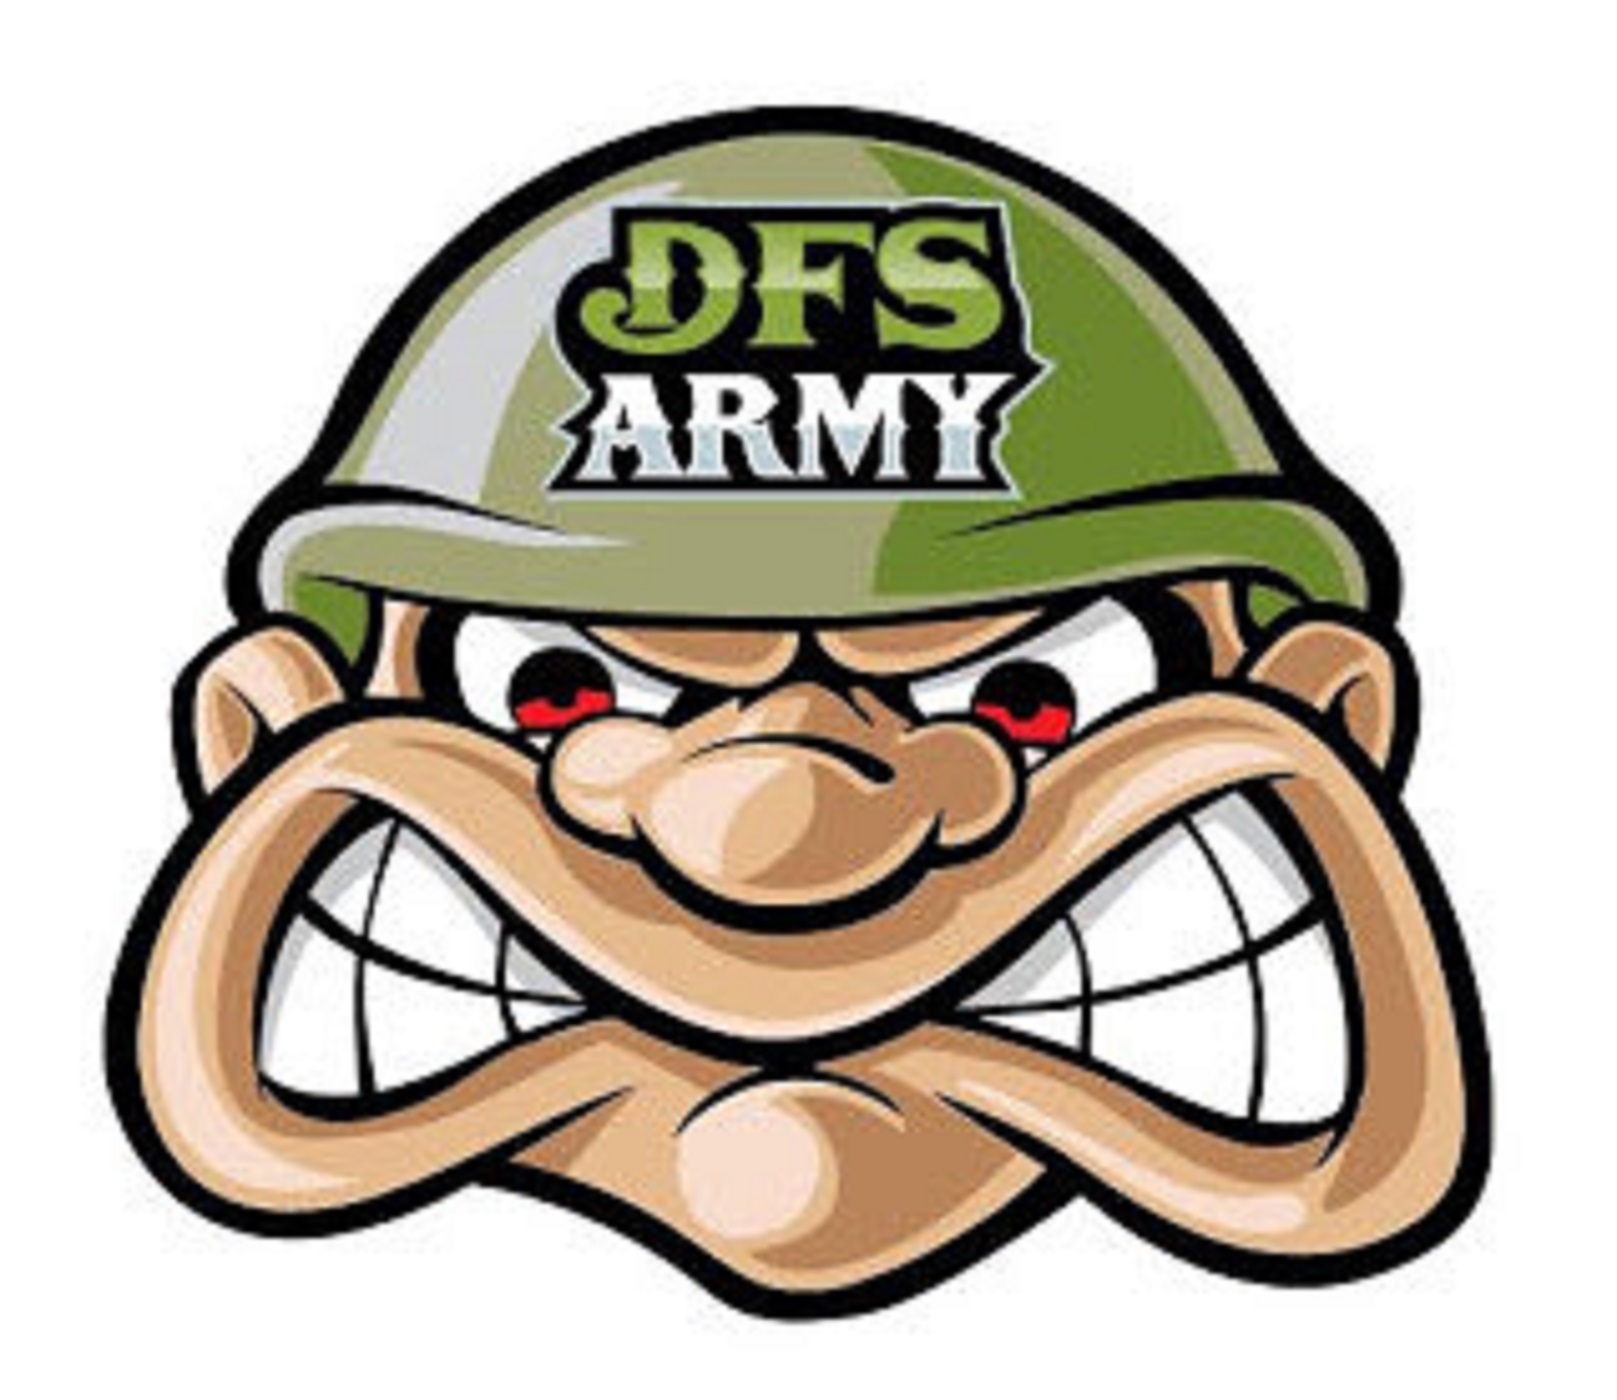 DFS Army 2016 NFL Fantasy Football Draft Preview